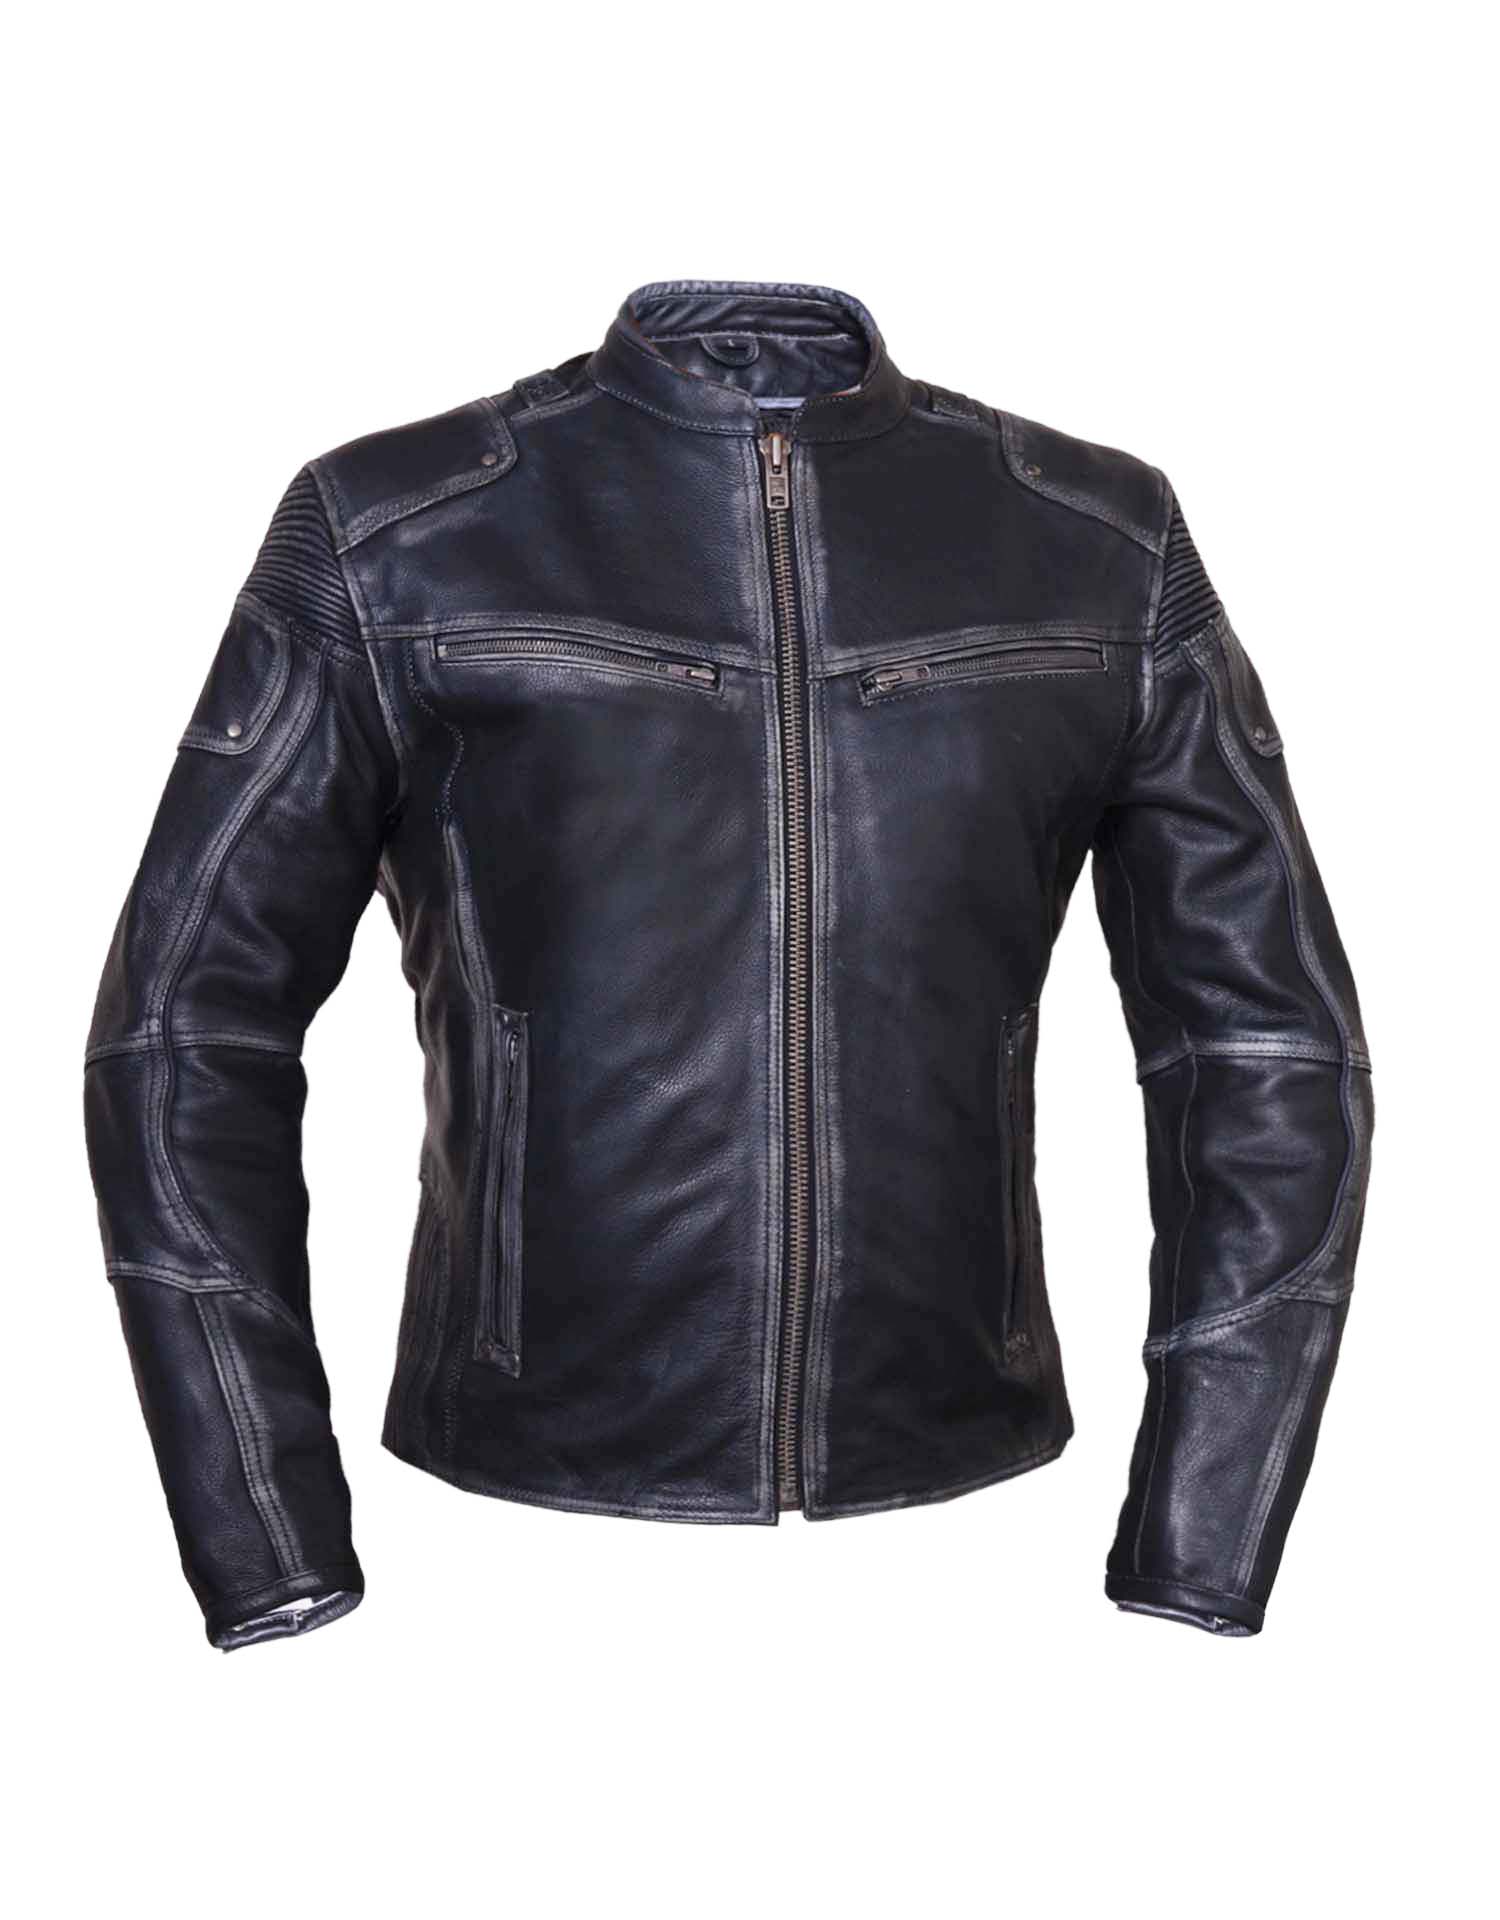 Ladies Durango Reflective Leather Jacket (Size: Small)